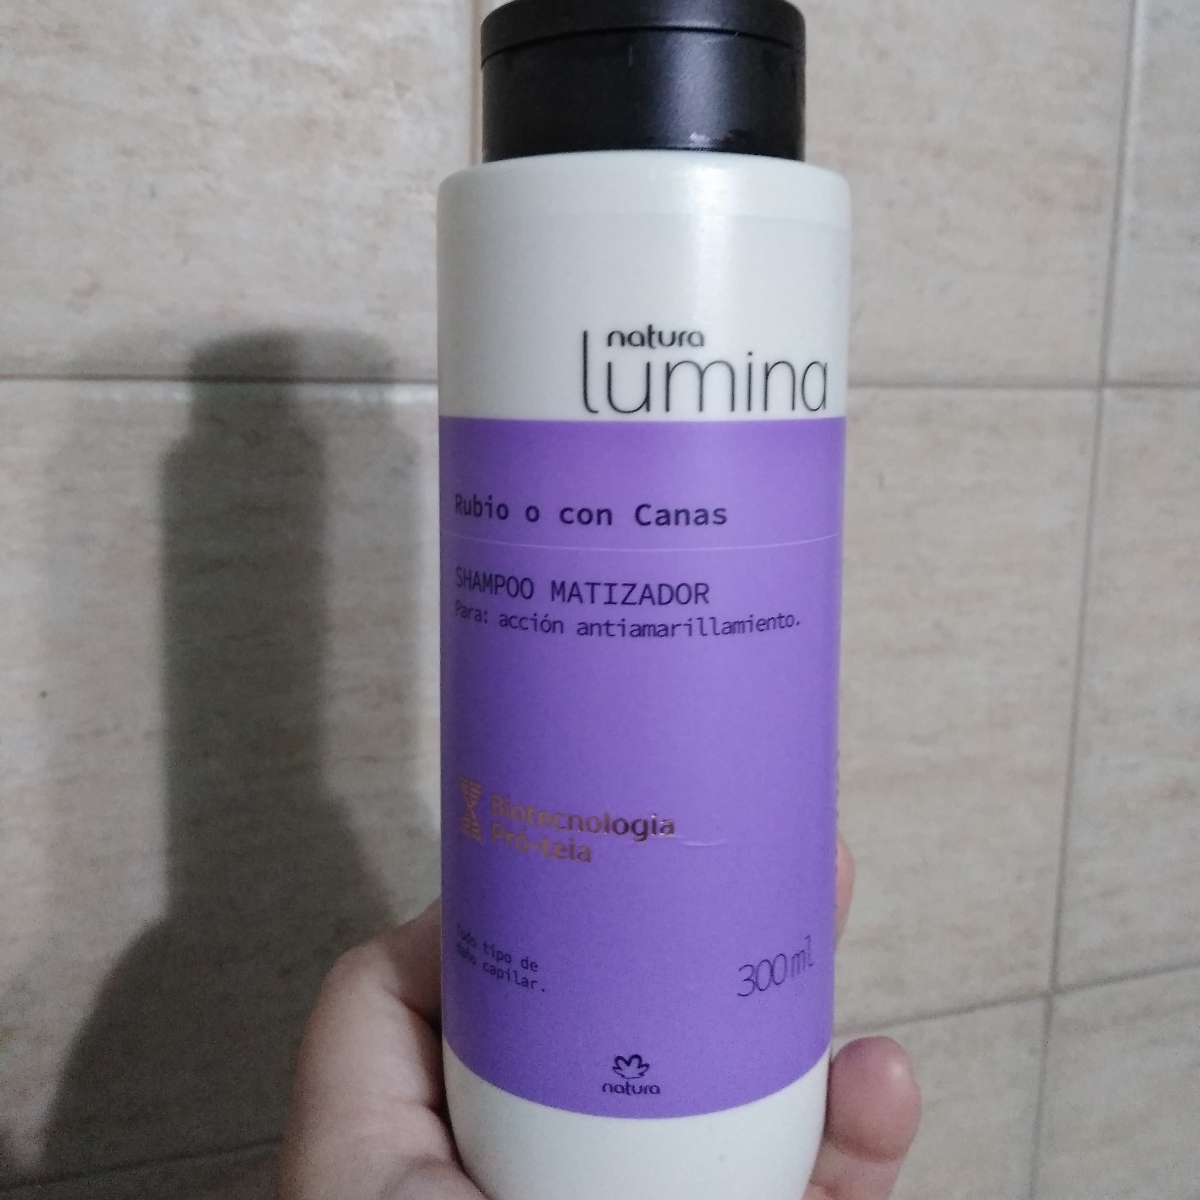 Natura Natura Lumina shampoo matizador Review | abillion